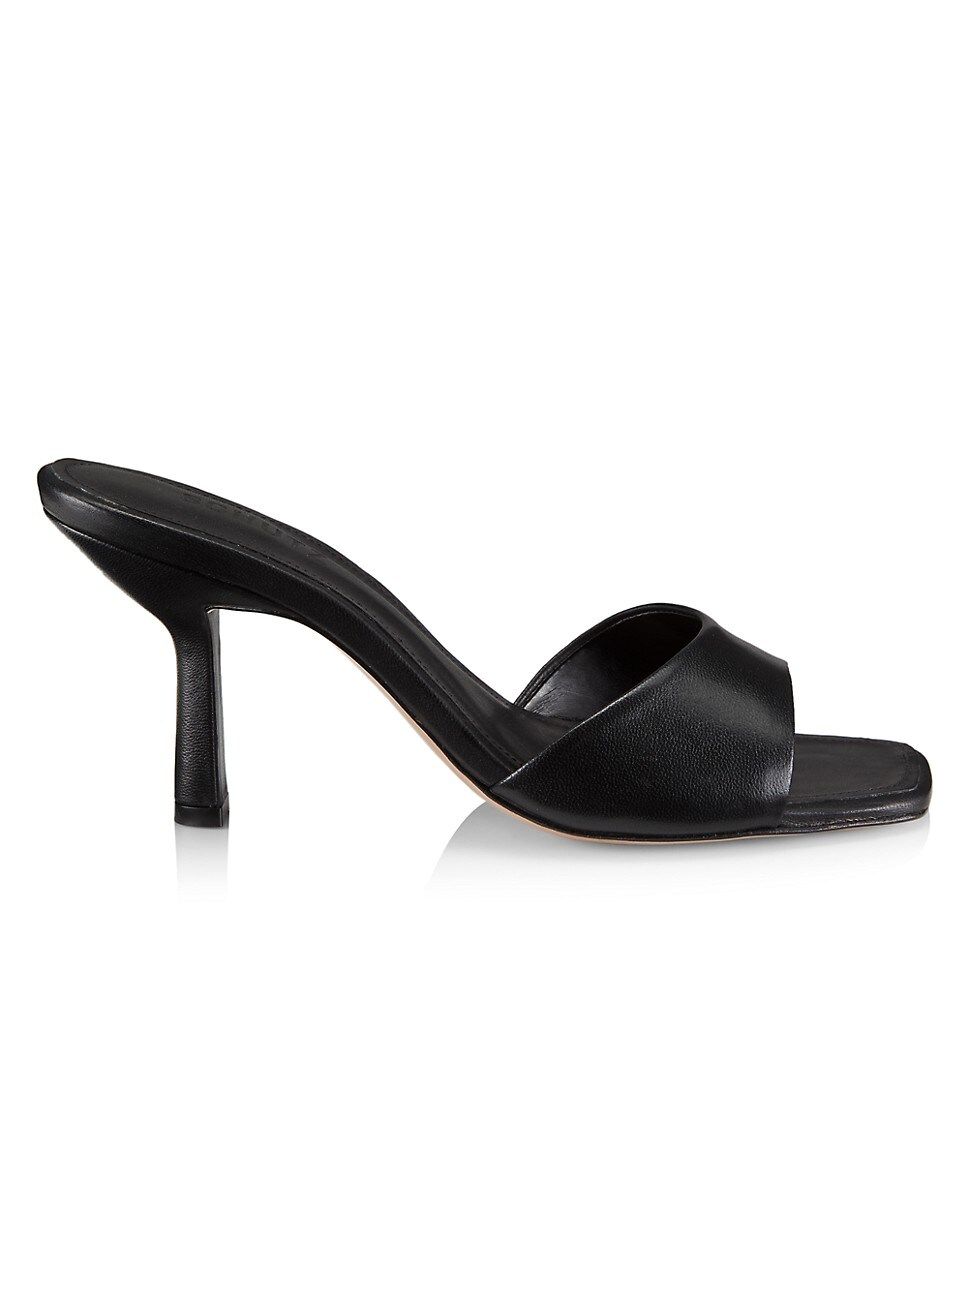 Posseni Leather Mule Sandals | Saks Fifth Avenue